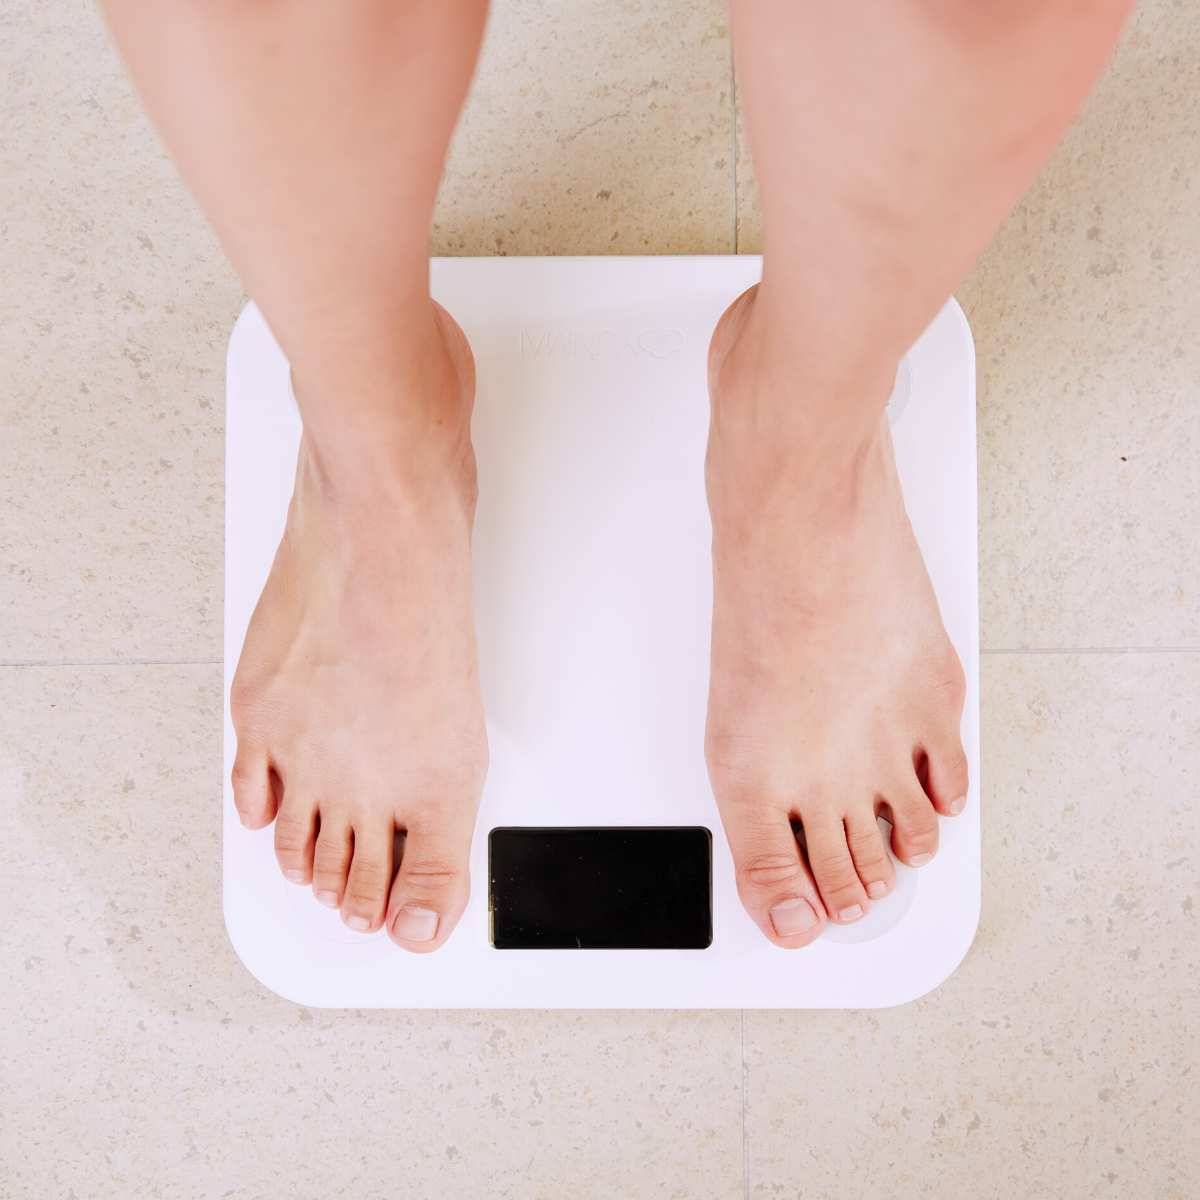 Factors that Affect Thyroid Weight Gain